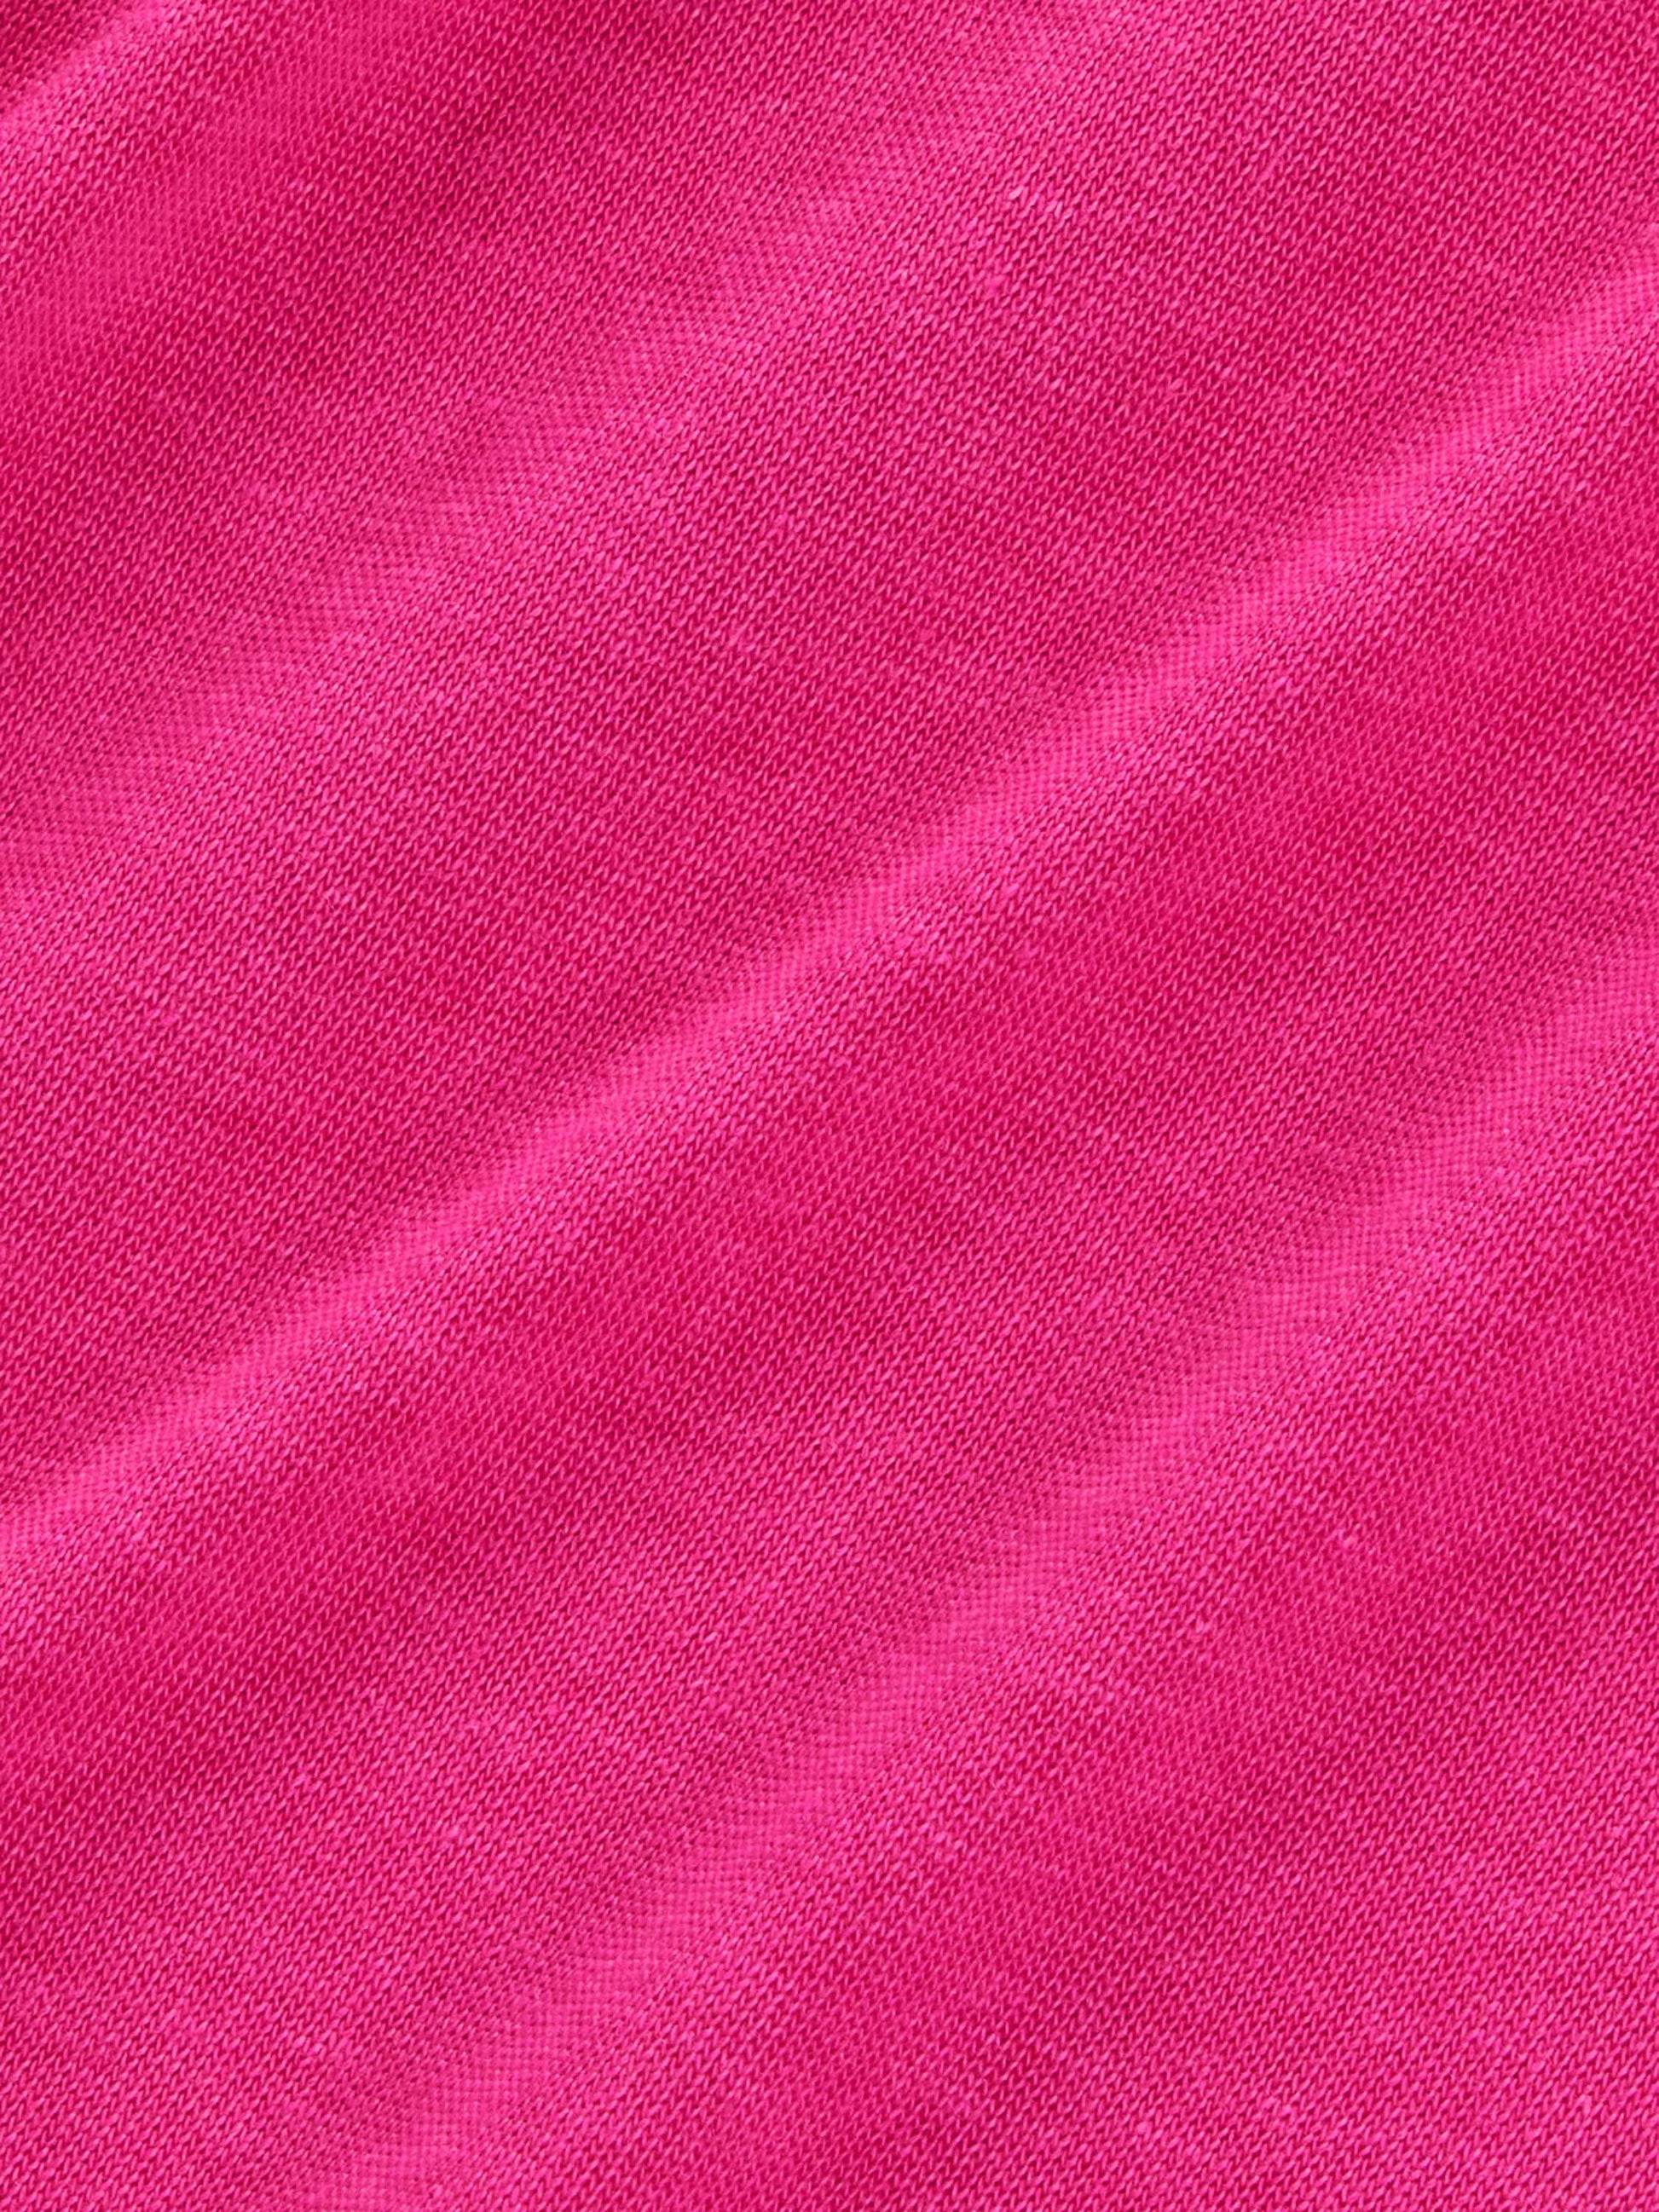 Frutfiber-Skater-T-Shirt-Tourmaline-Pink-material